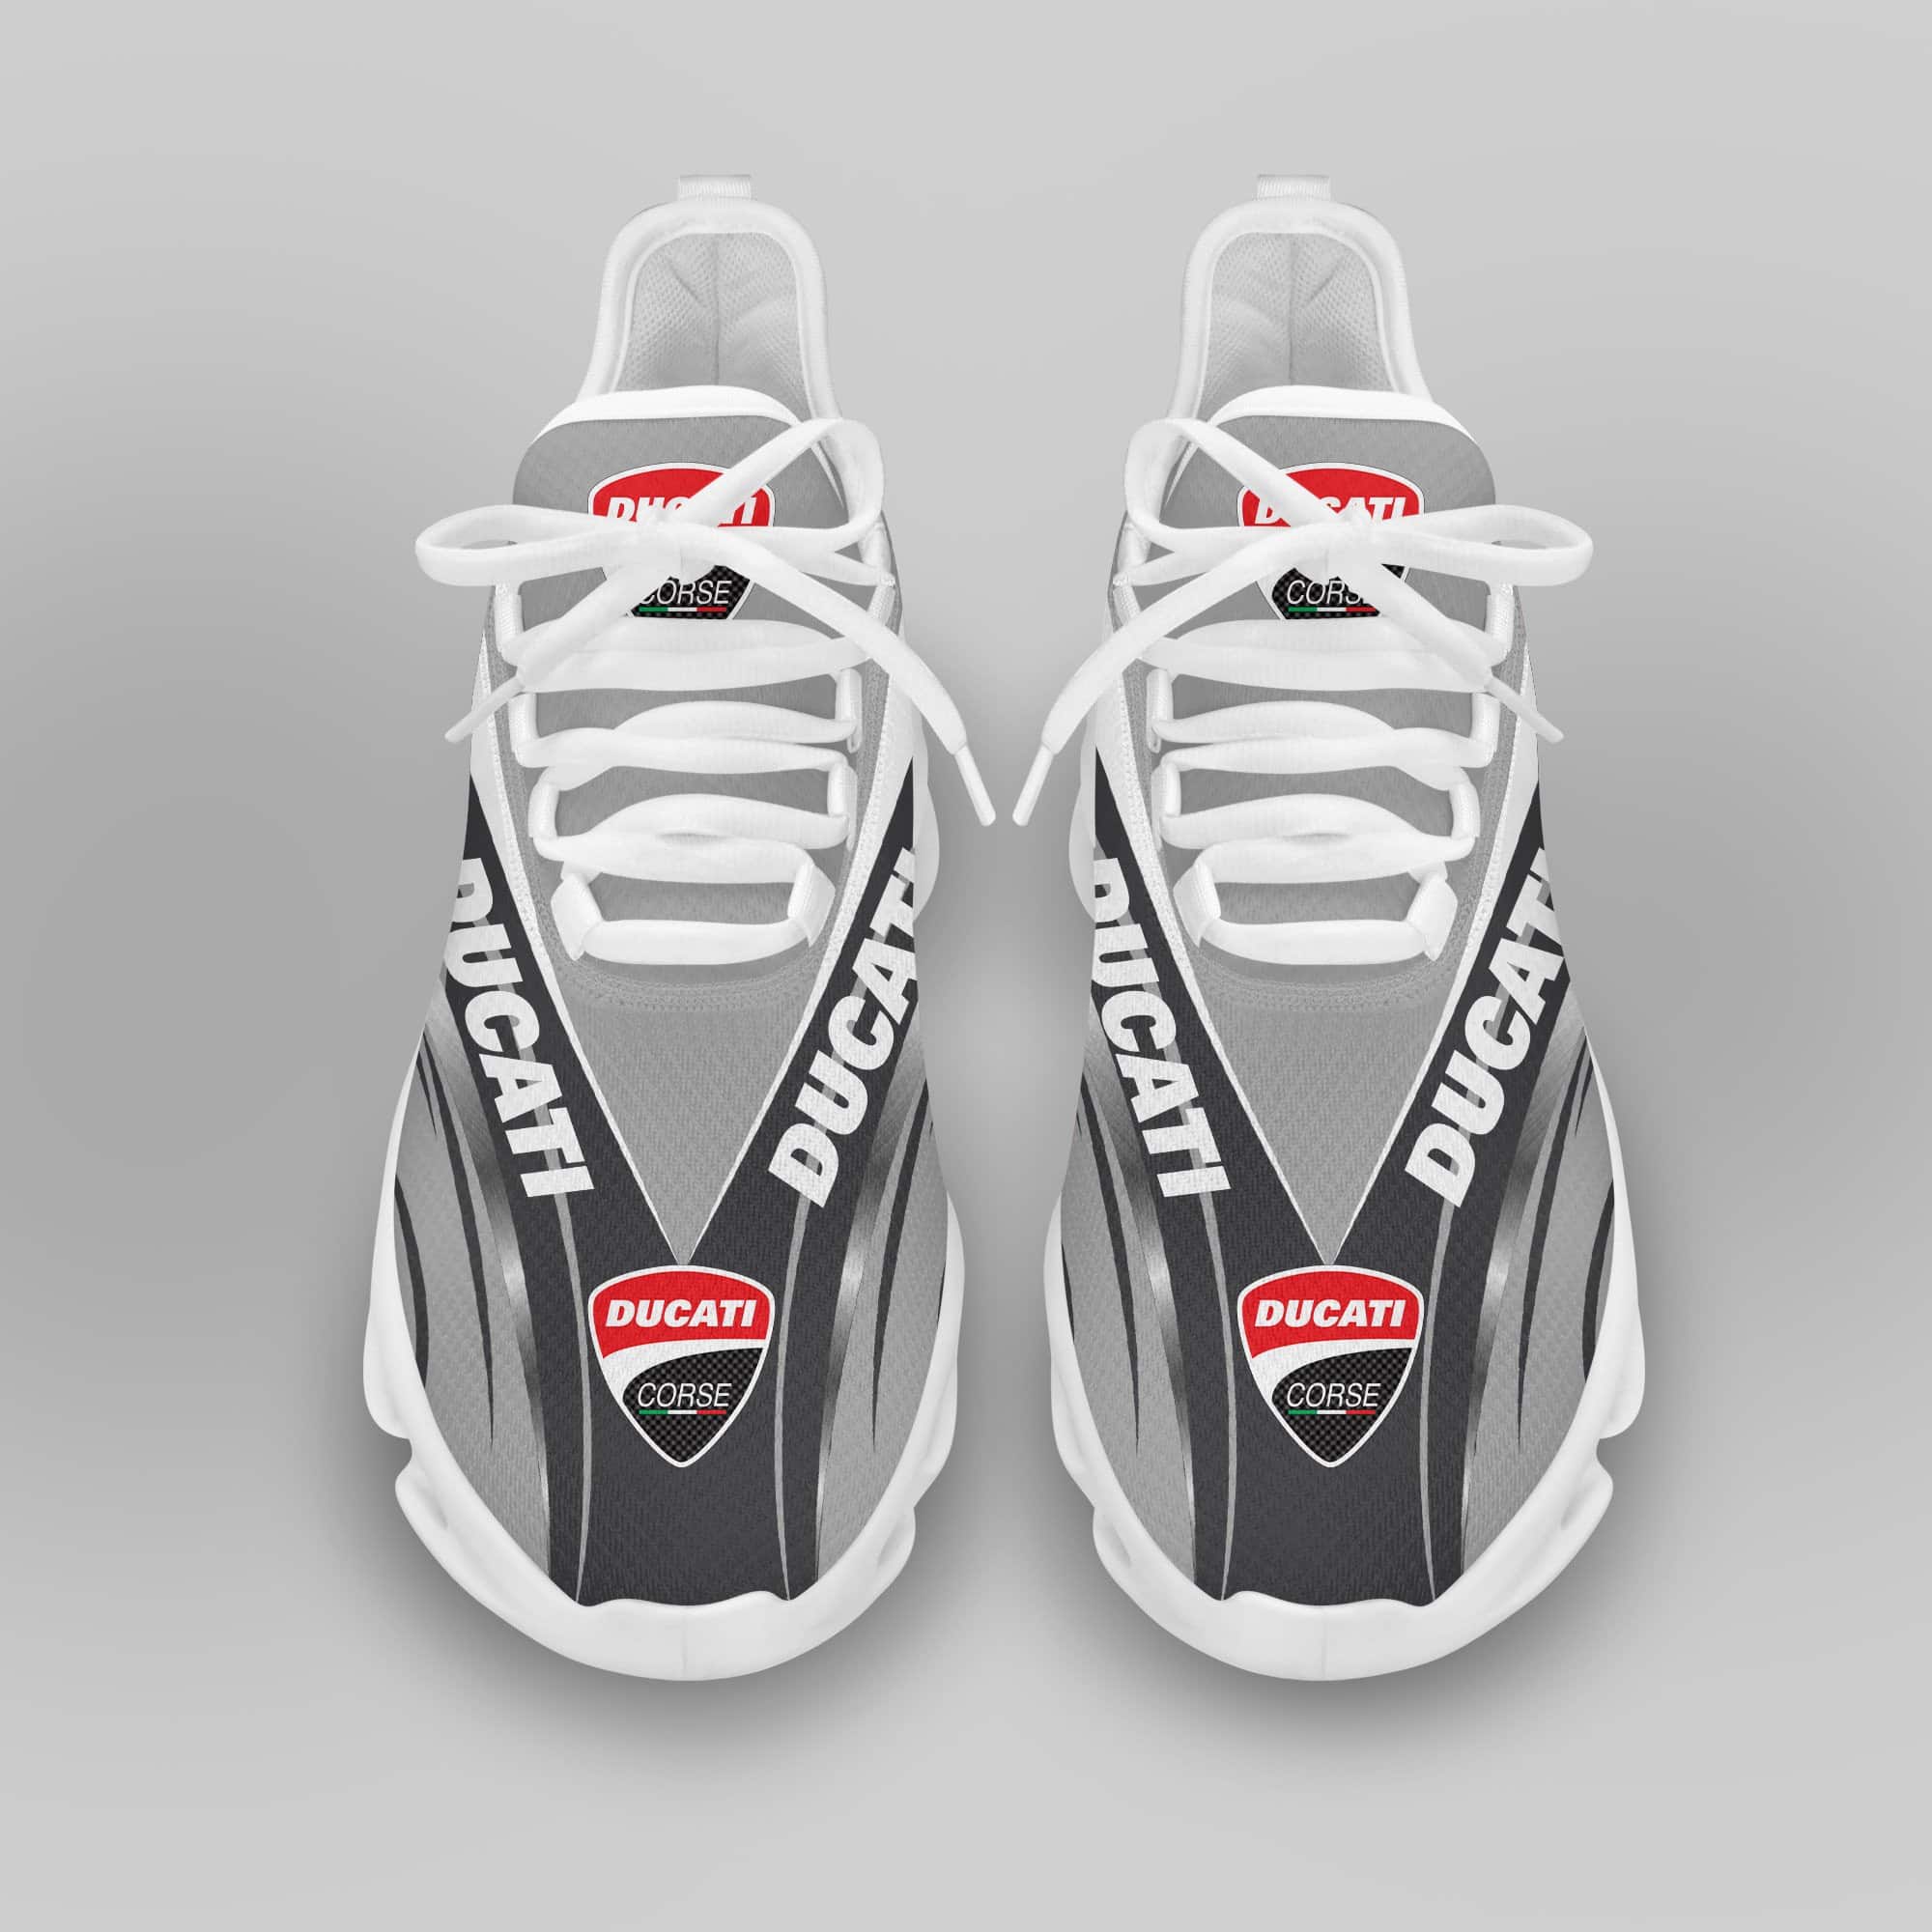 Ducati Racing Running Shoes Max Soul Shoes Sneakers Ver 56 3